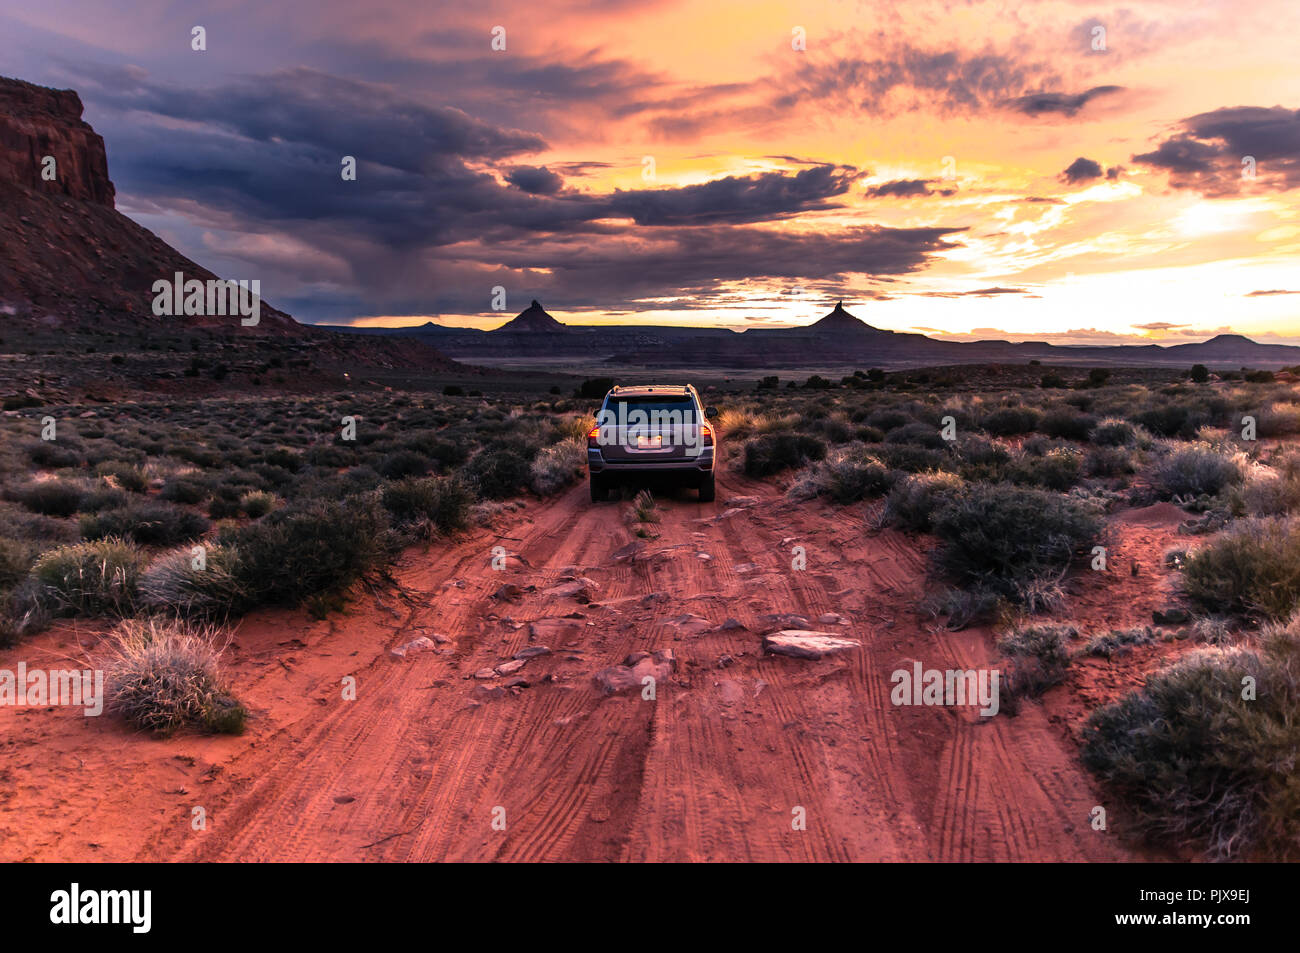 Off road vehicle facing sunset, Indian Creek, Moab, Utah, USA Stock Photo